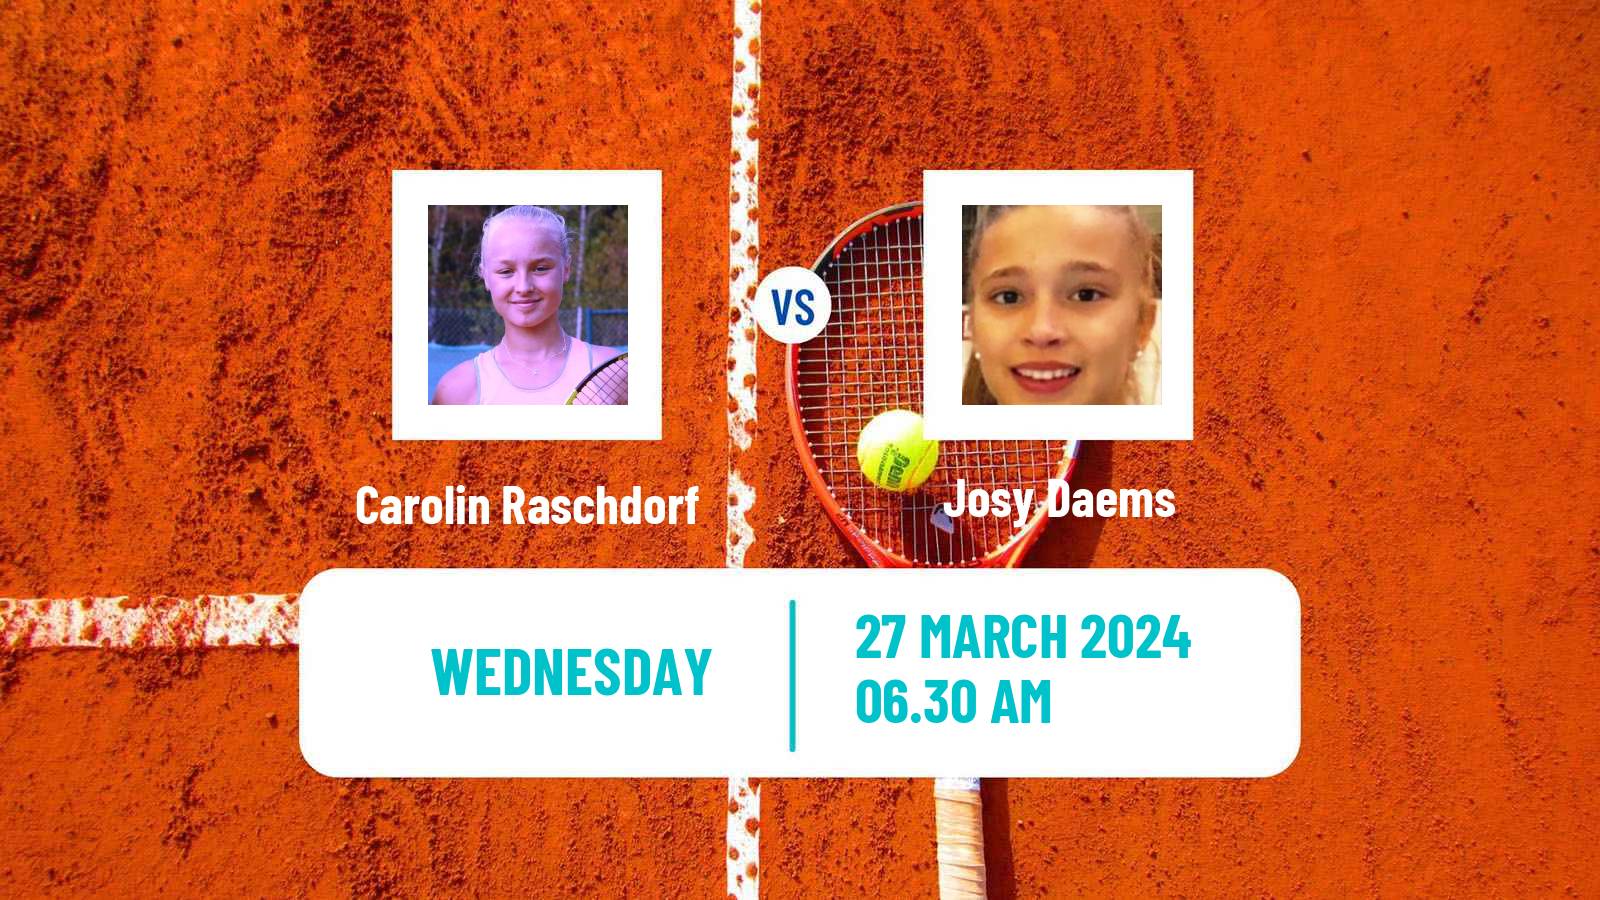 Tennis ITF W15 Antalya 7 Women Carolin Raschdorf - Josy Daems